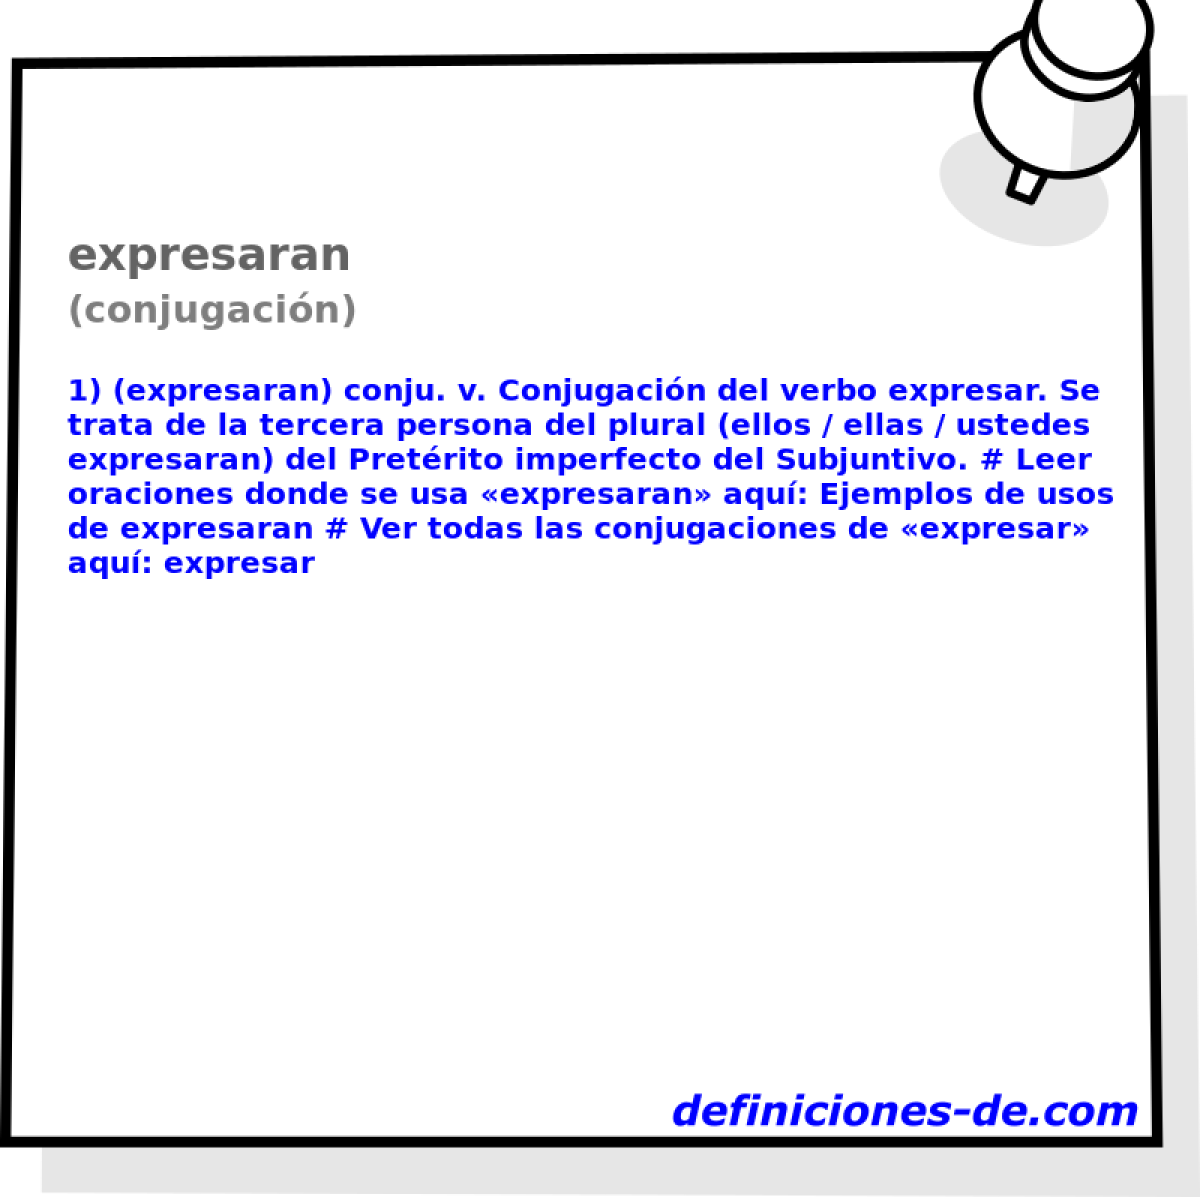 expresaran (conjugacin)